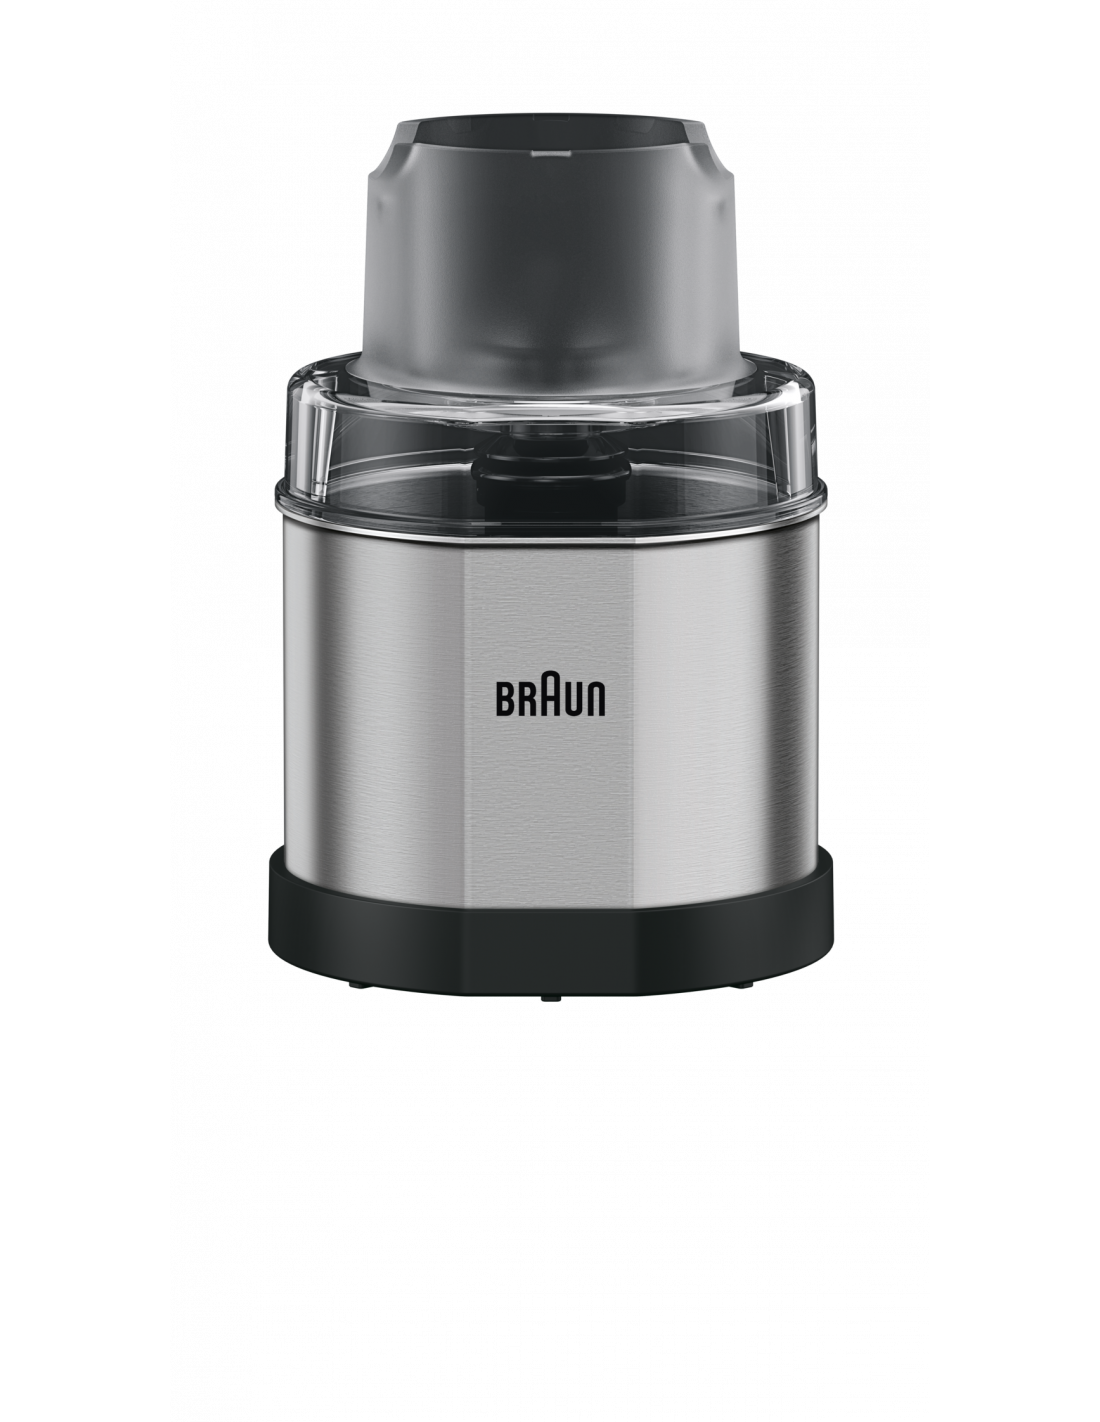 Braun MultiQuick 9 Spice, 1200 W, black/inox - Hand blender, MQ9138XI